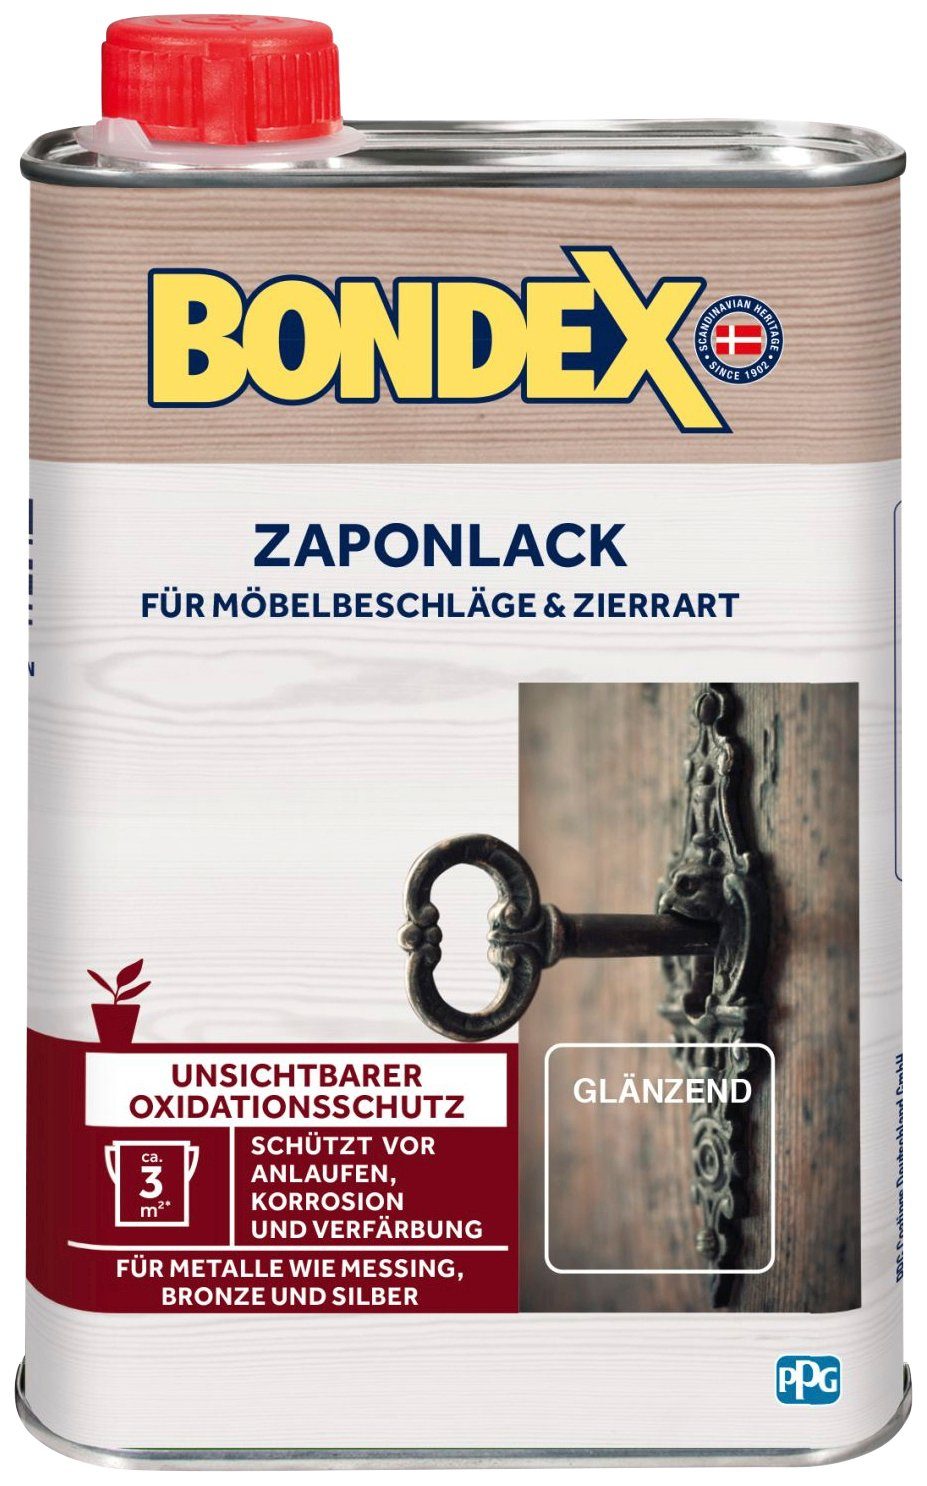 Inhalt 0,25 Glänzend, Bondex / ZAPONLACK, Liter Farblos Holzlack